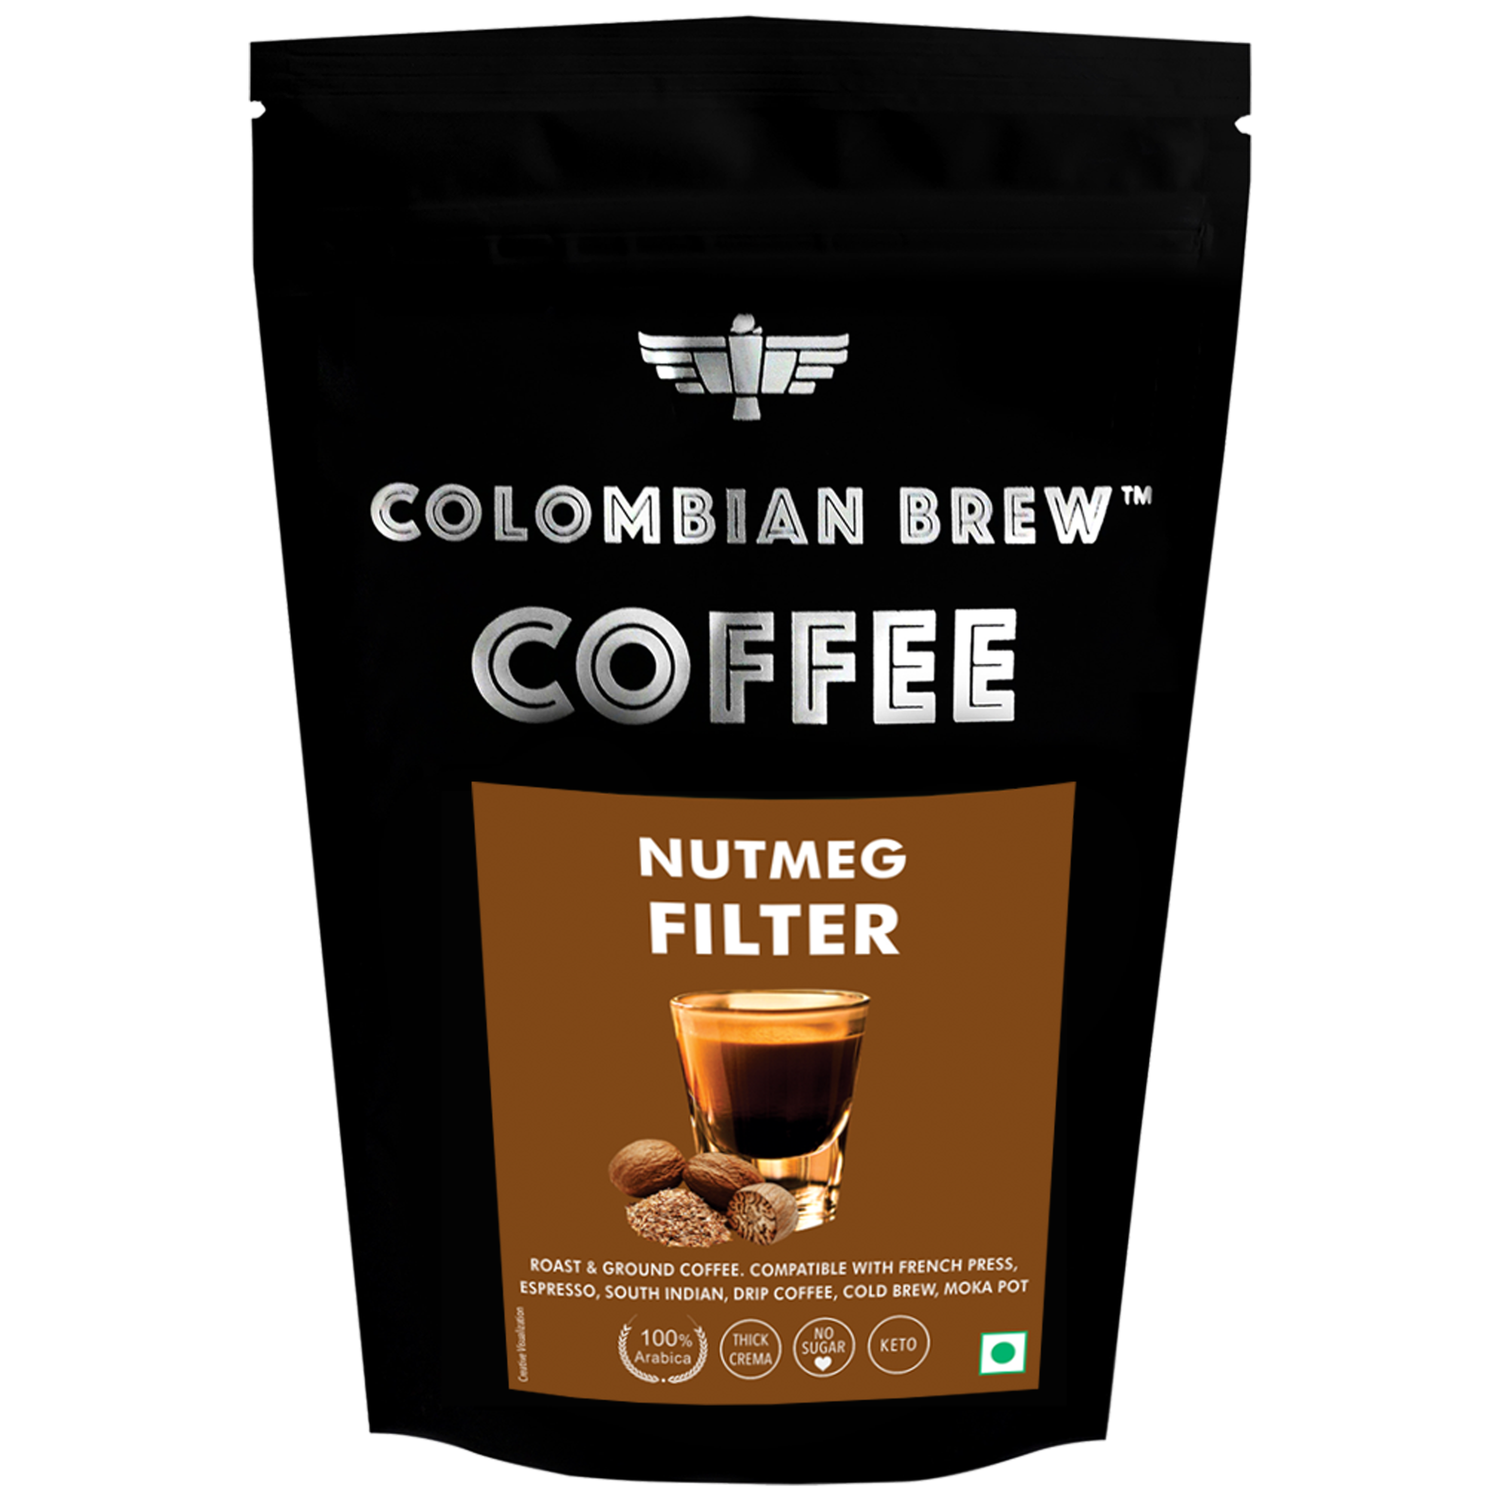 Nutmeg Filter Coffee Powder, Arabica Roast & Ground, 1kg 